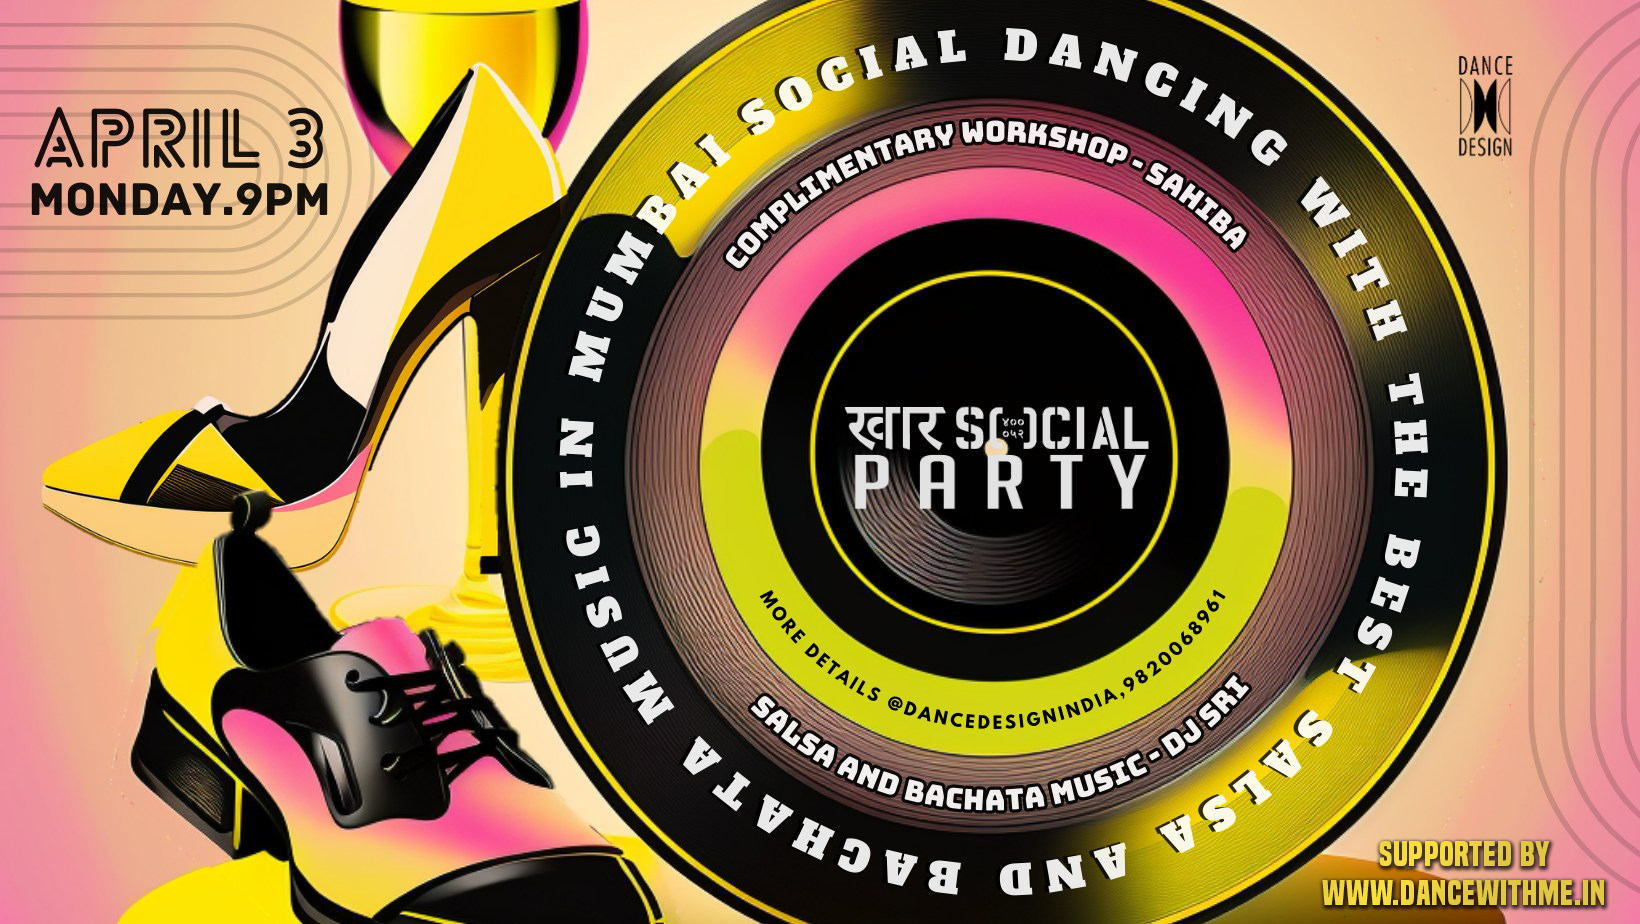 Salsa Bachata Night Mumbai Monday Khar Social Party by Dance Design 3 April 2023 - Dance With Me India